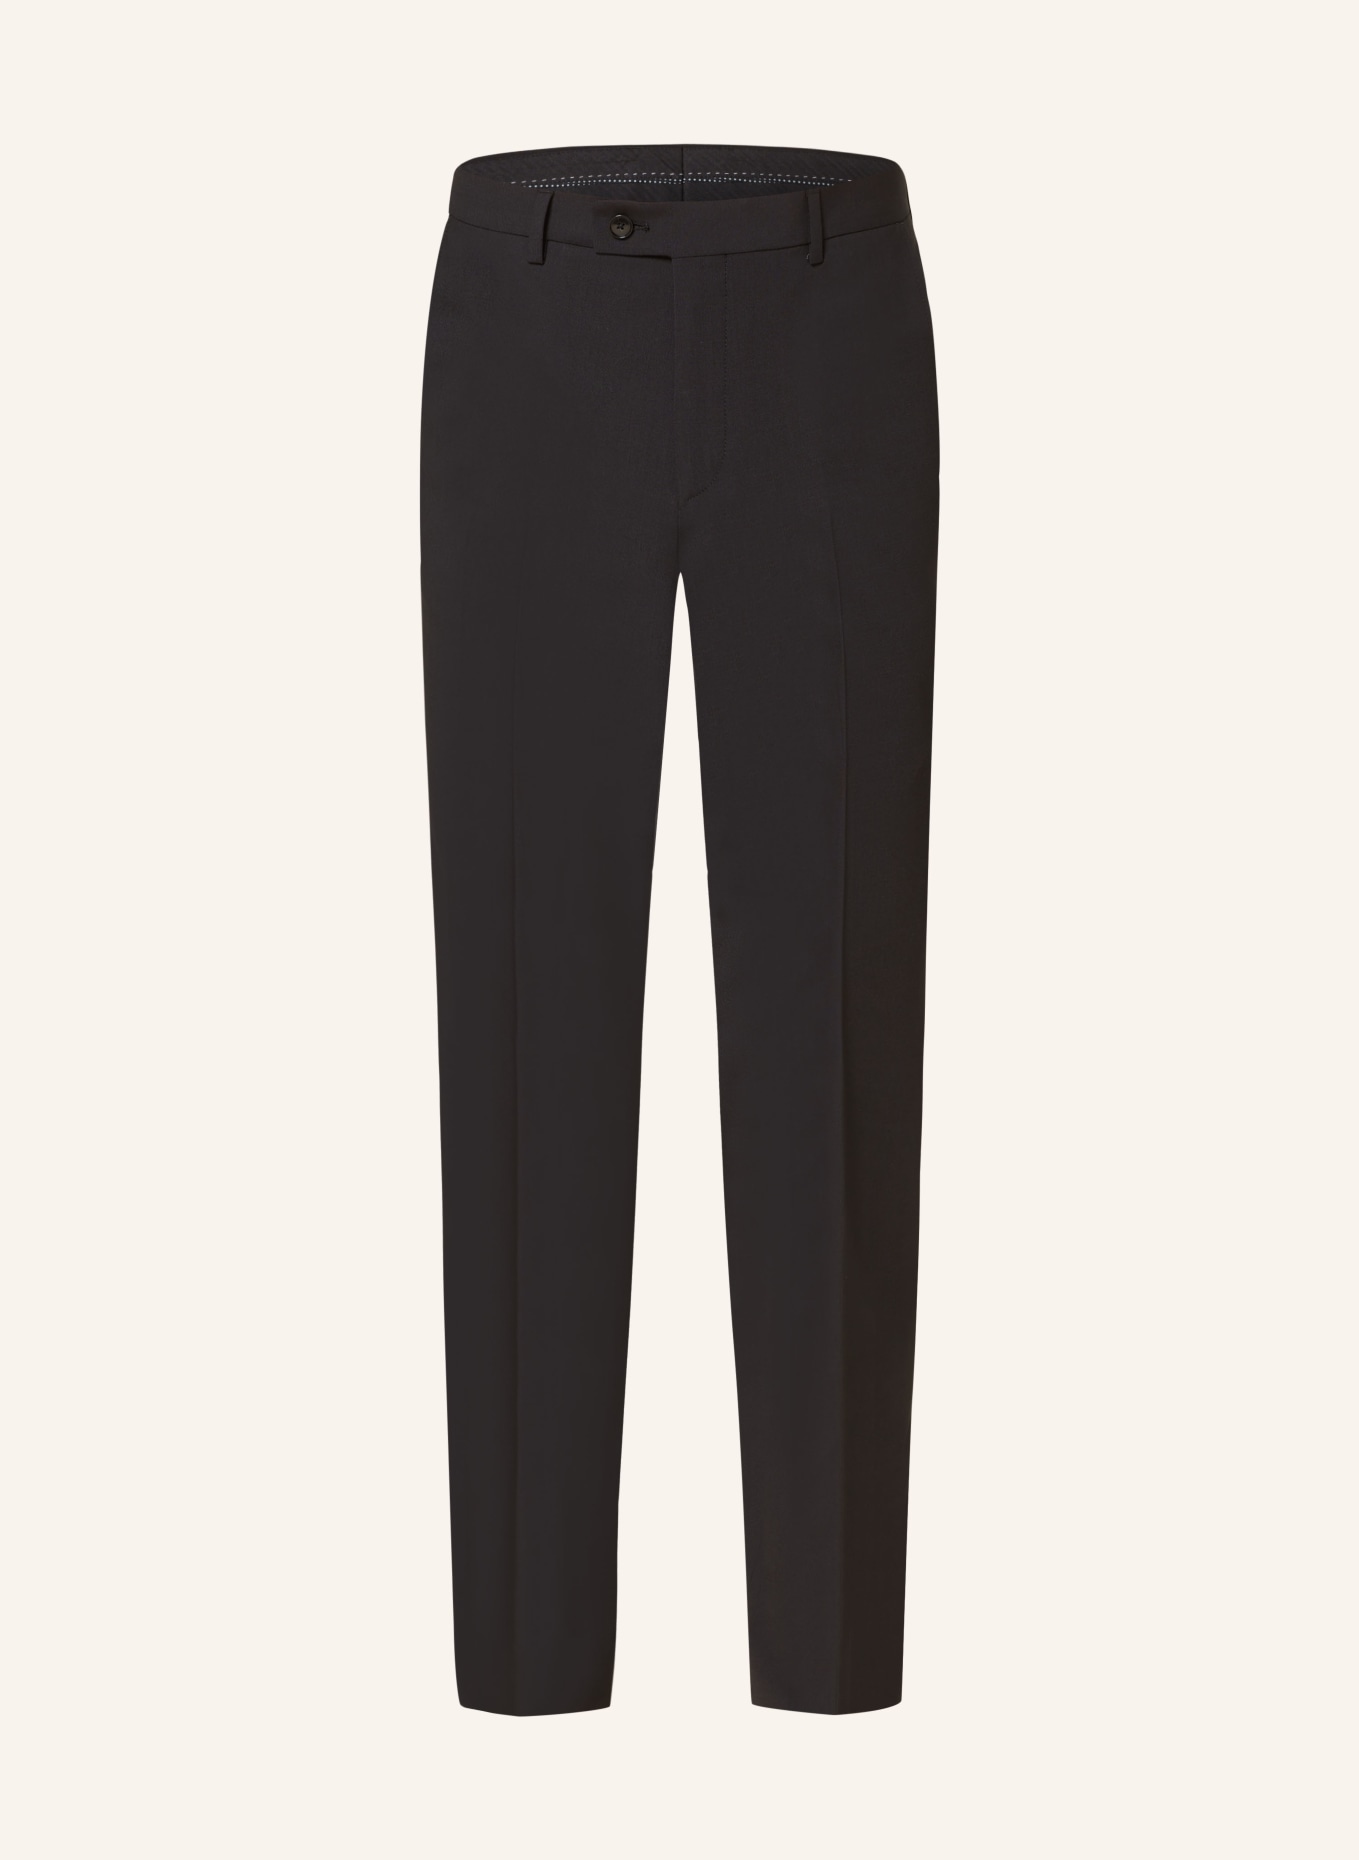 SAND COPENHAGEN Anzughose Slim Fit, Farbe: 200 BLACK (Bild 1)